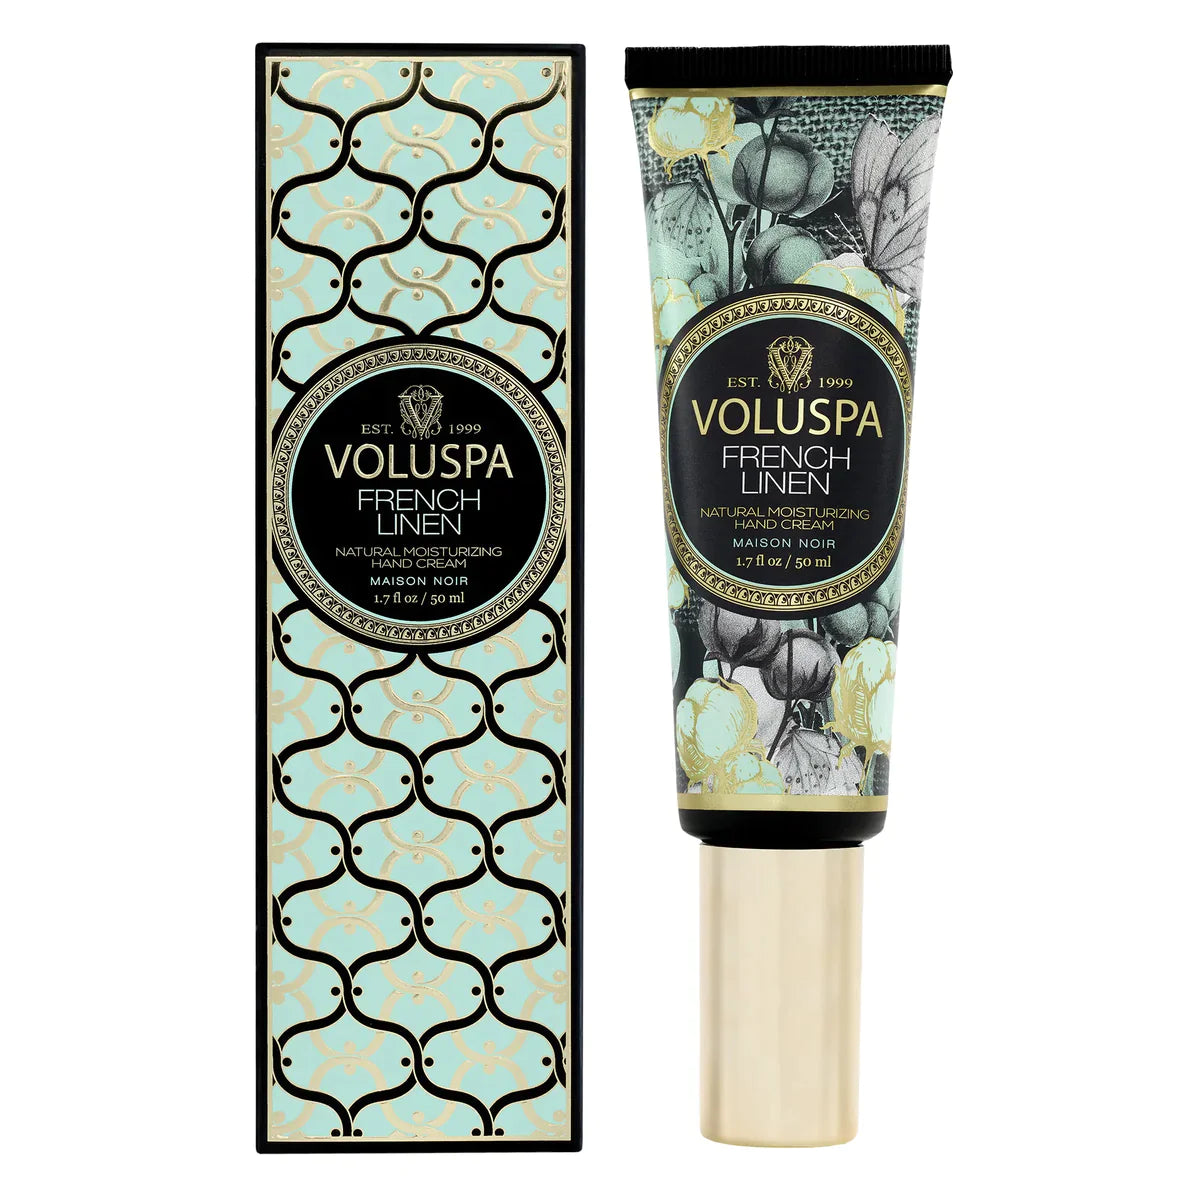 Voluspa - French Linen Natural Moisturizing Hand Cream